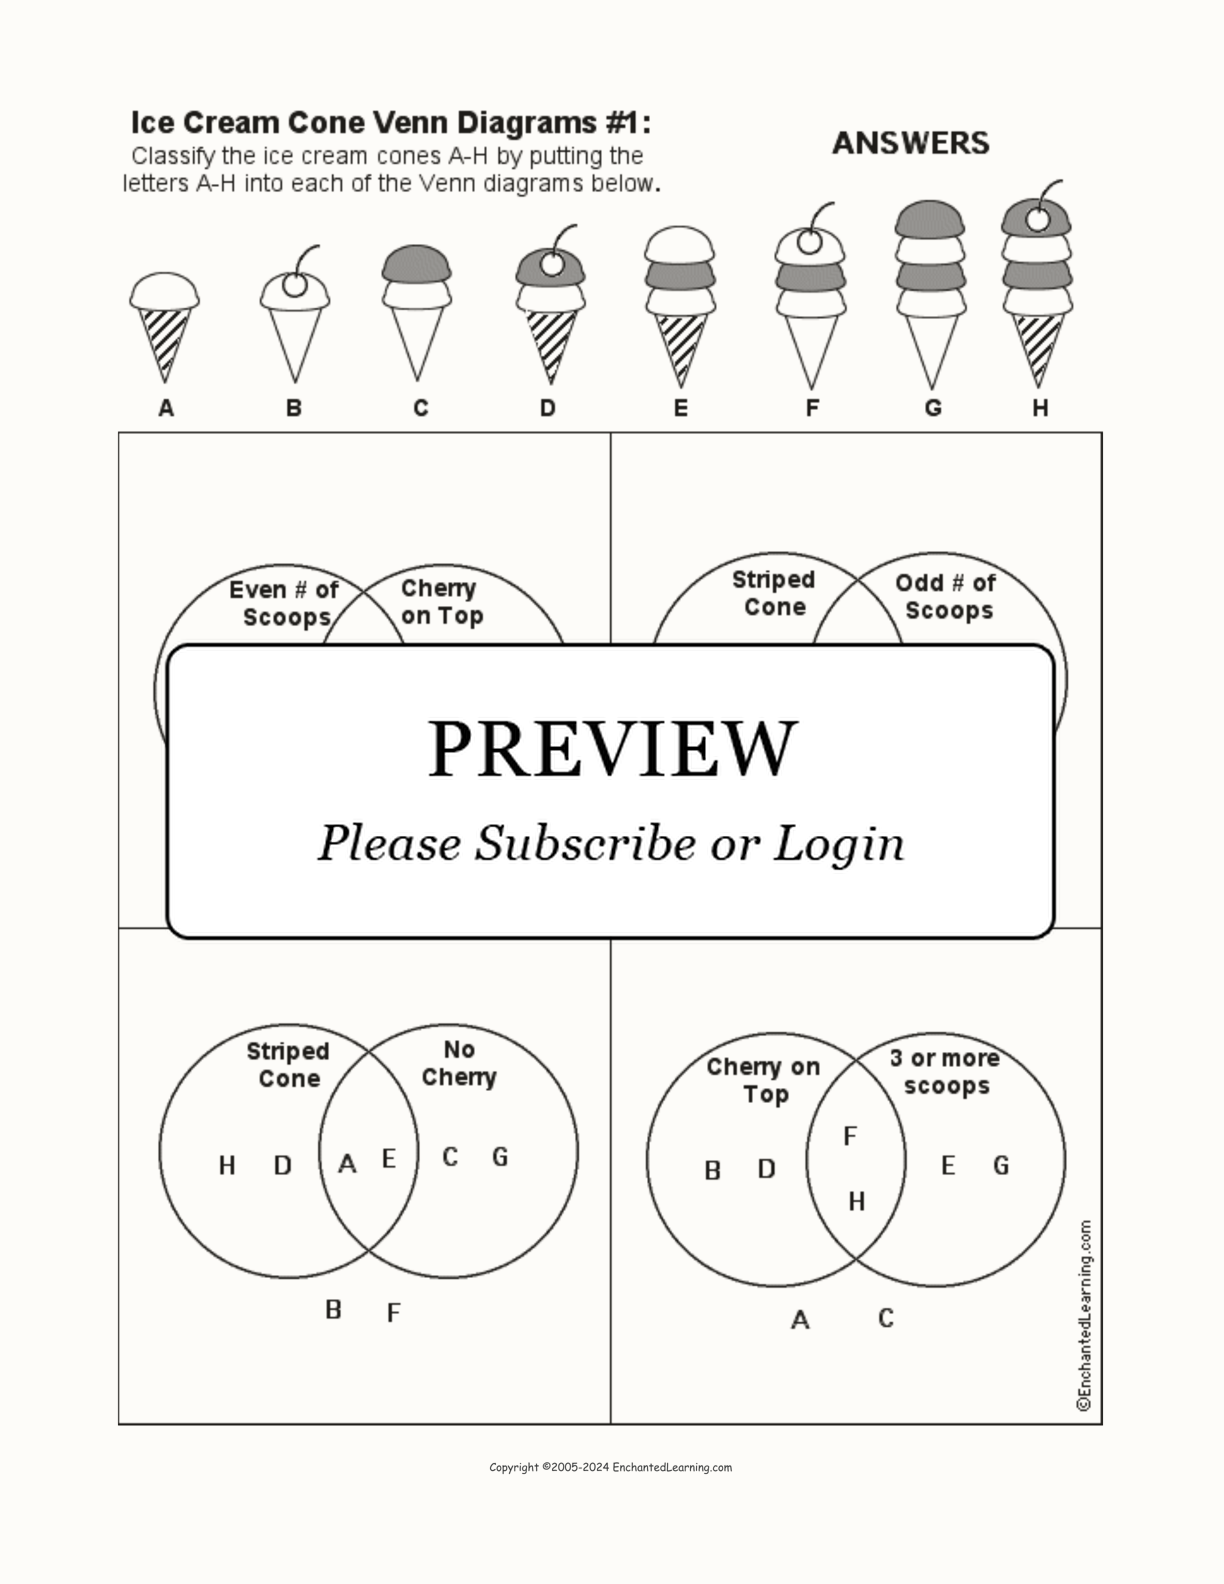 Ice Cream Cone Venn Diagram #1 interactive worksheet page 2